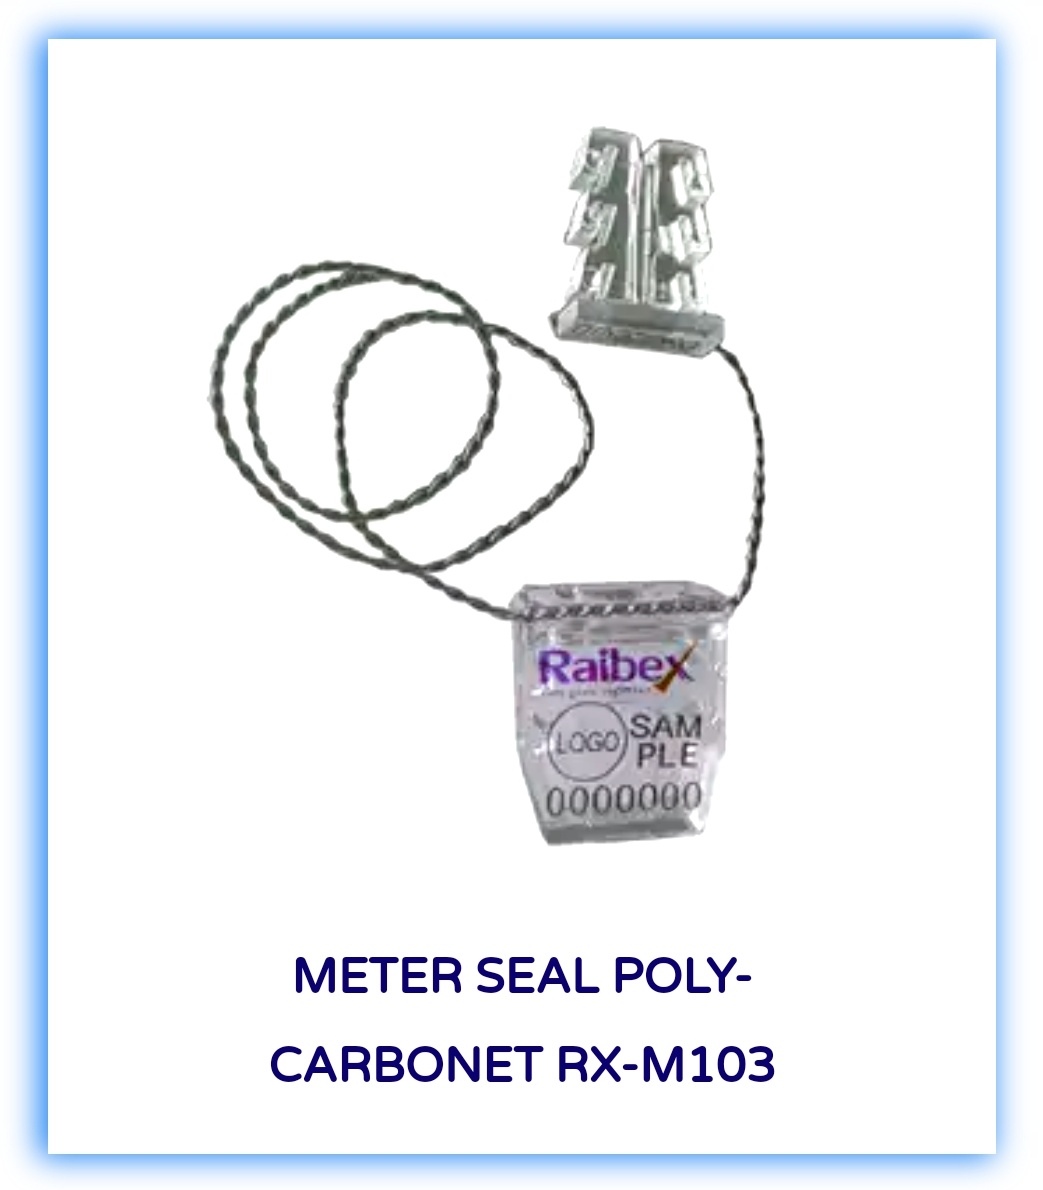 Meter Security Seals at Best Price in India